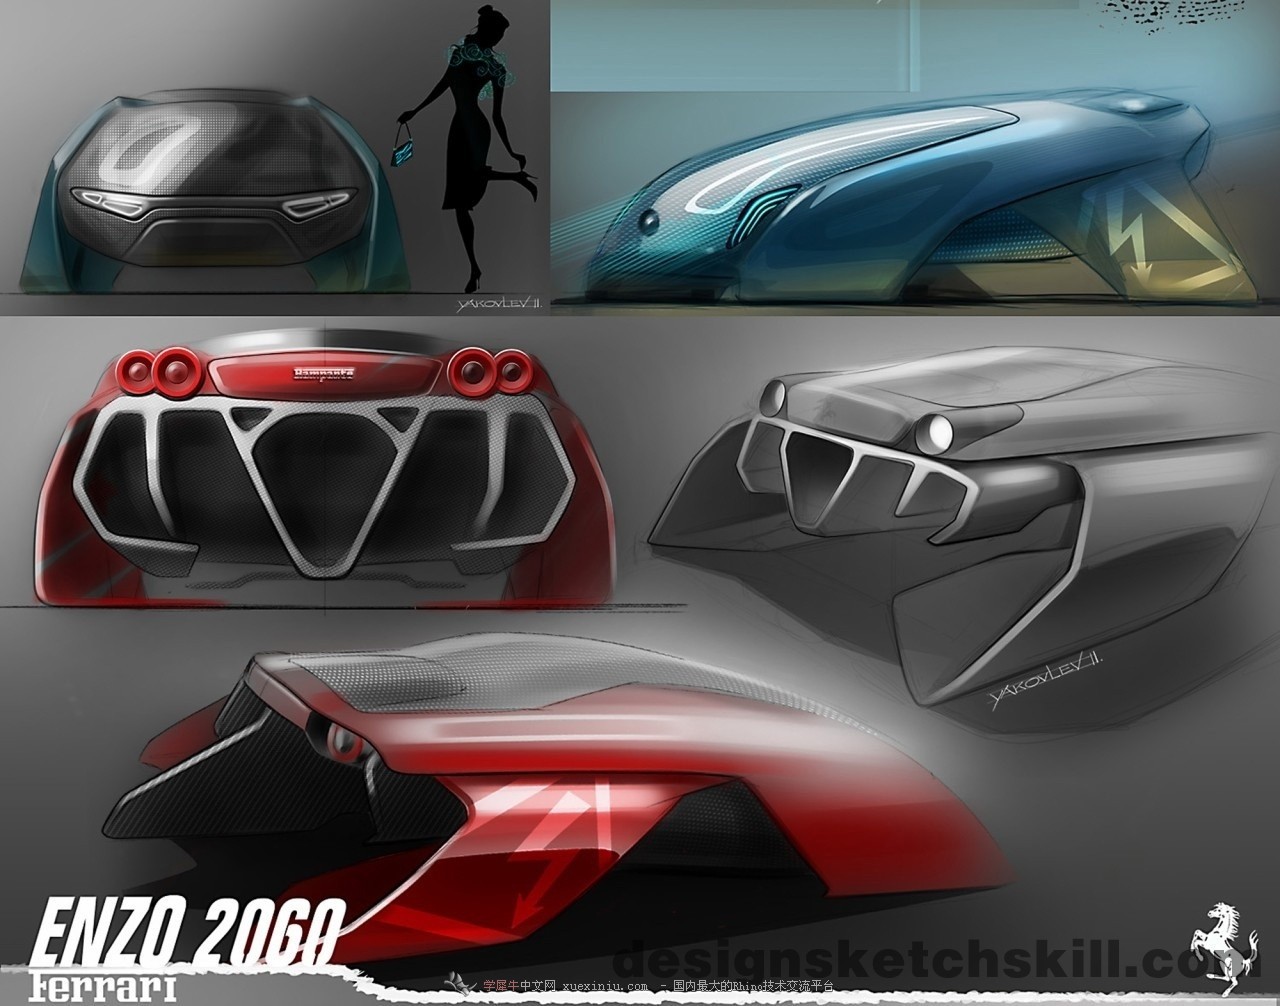 Ferrari Enzo 2060 概念汽车设计3.jpg